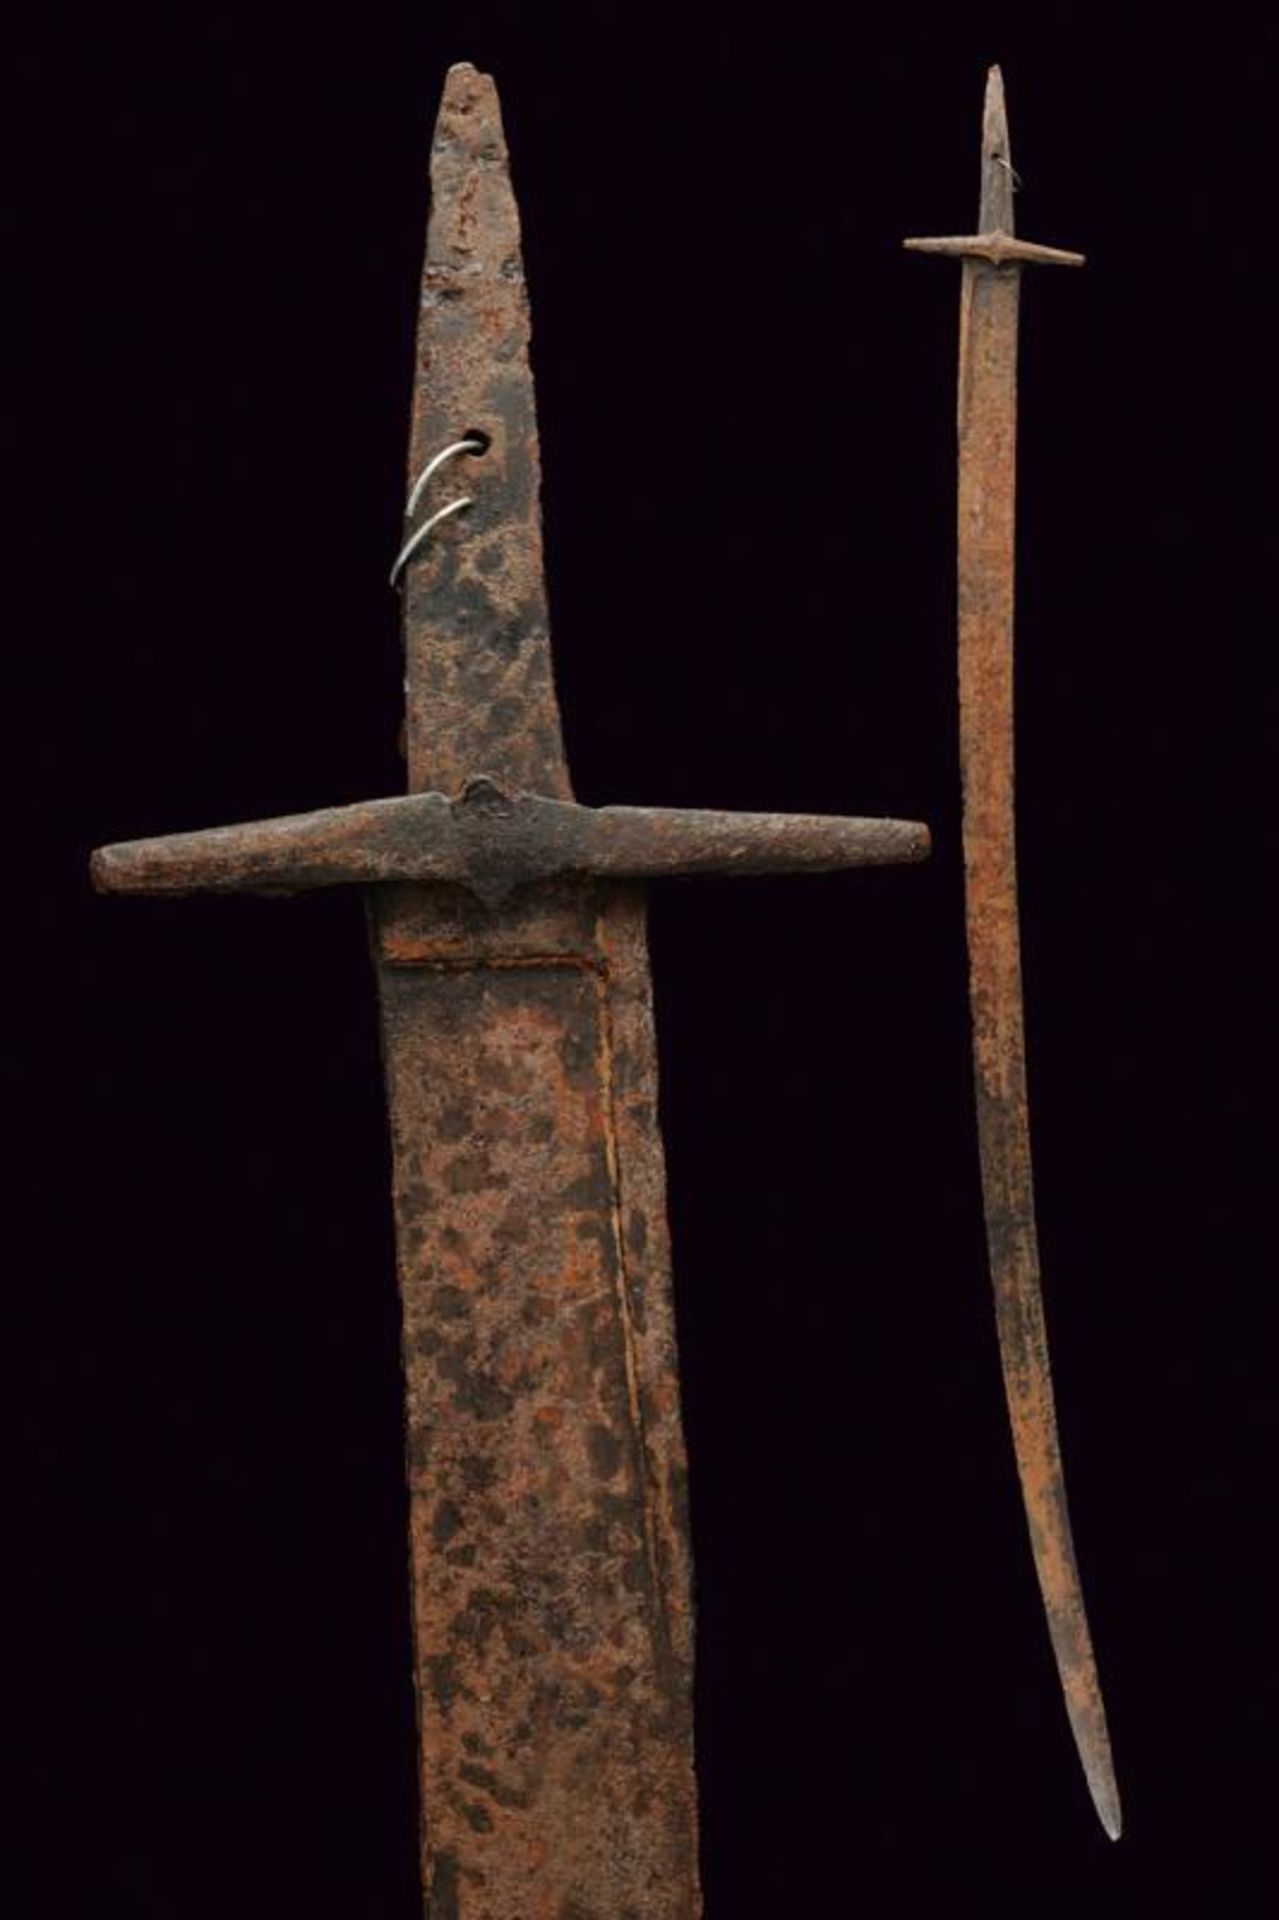 A Tatar's sabre